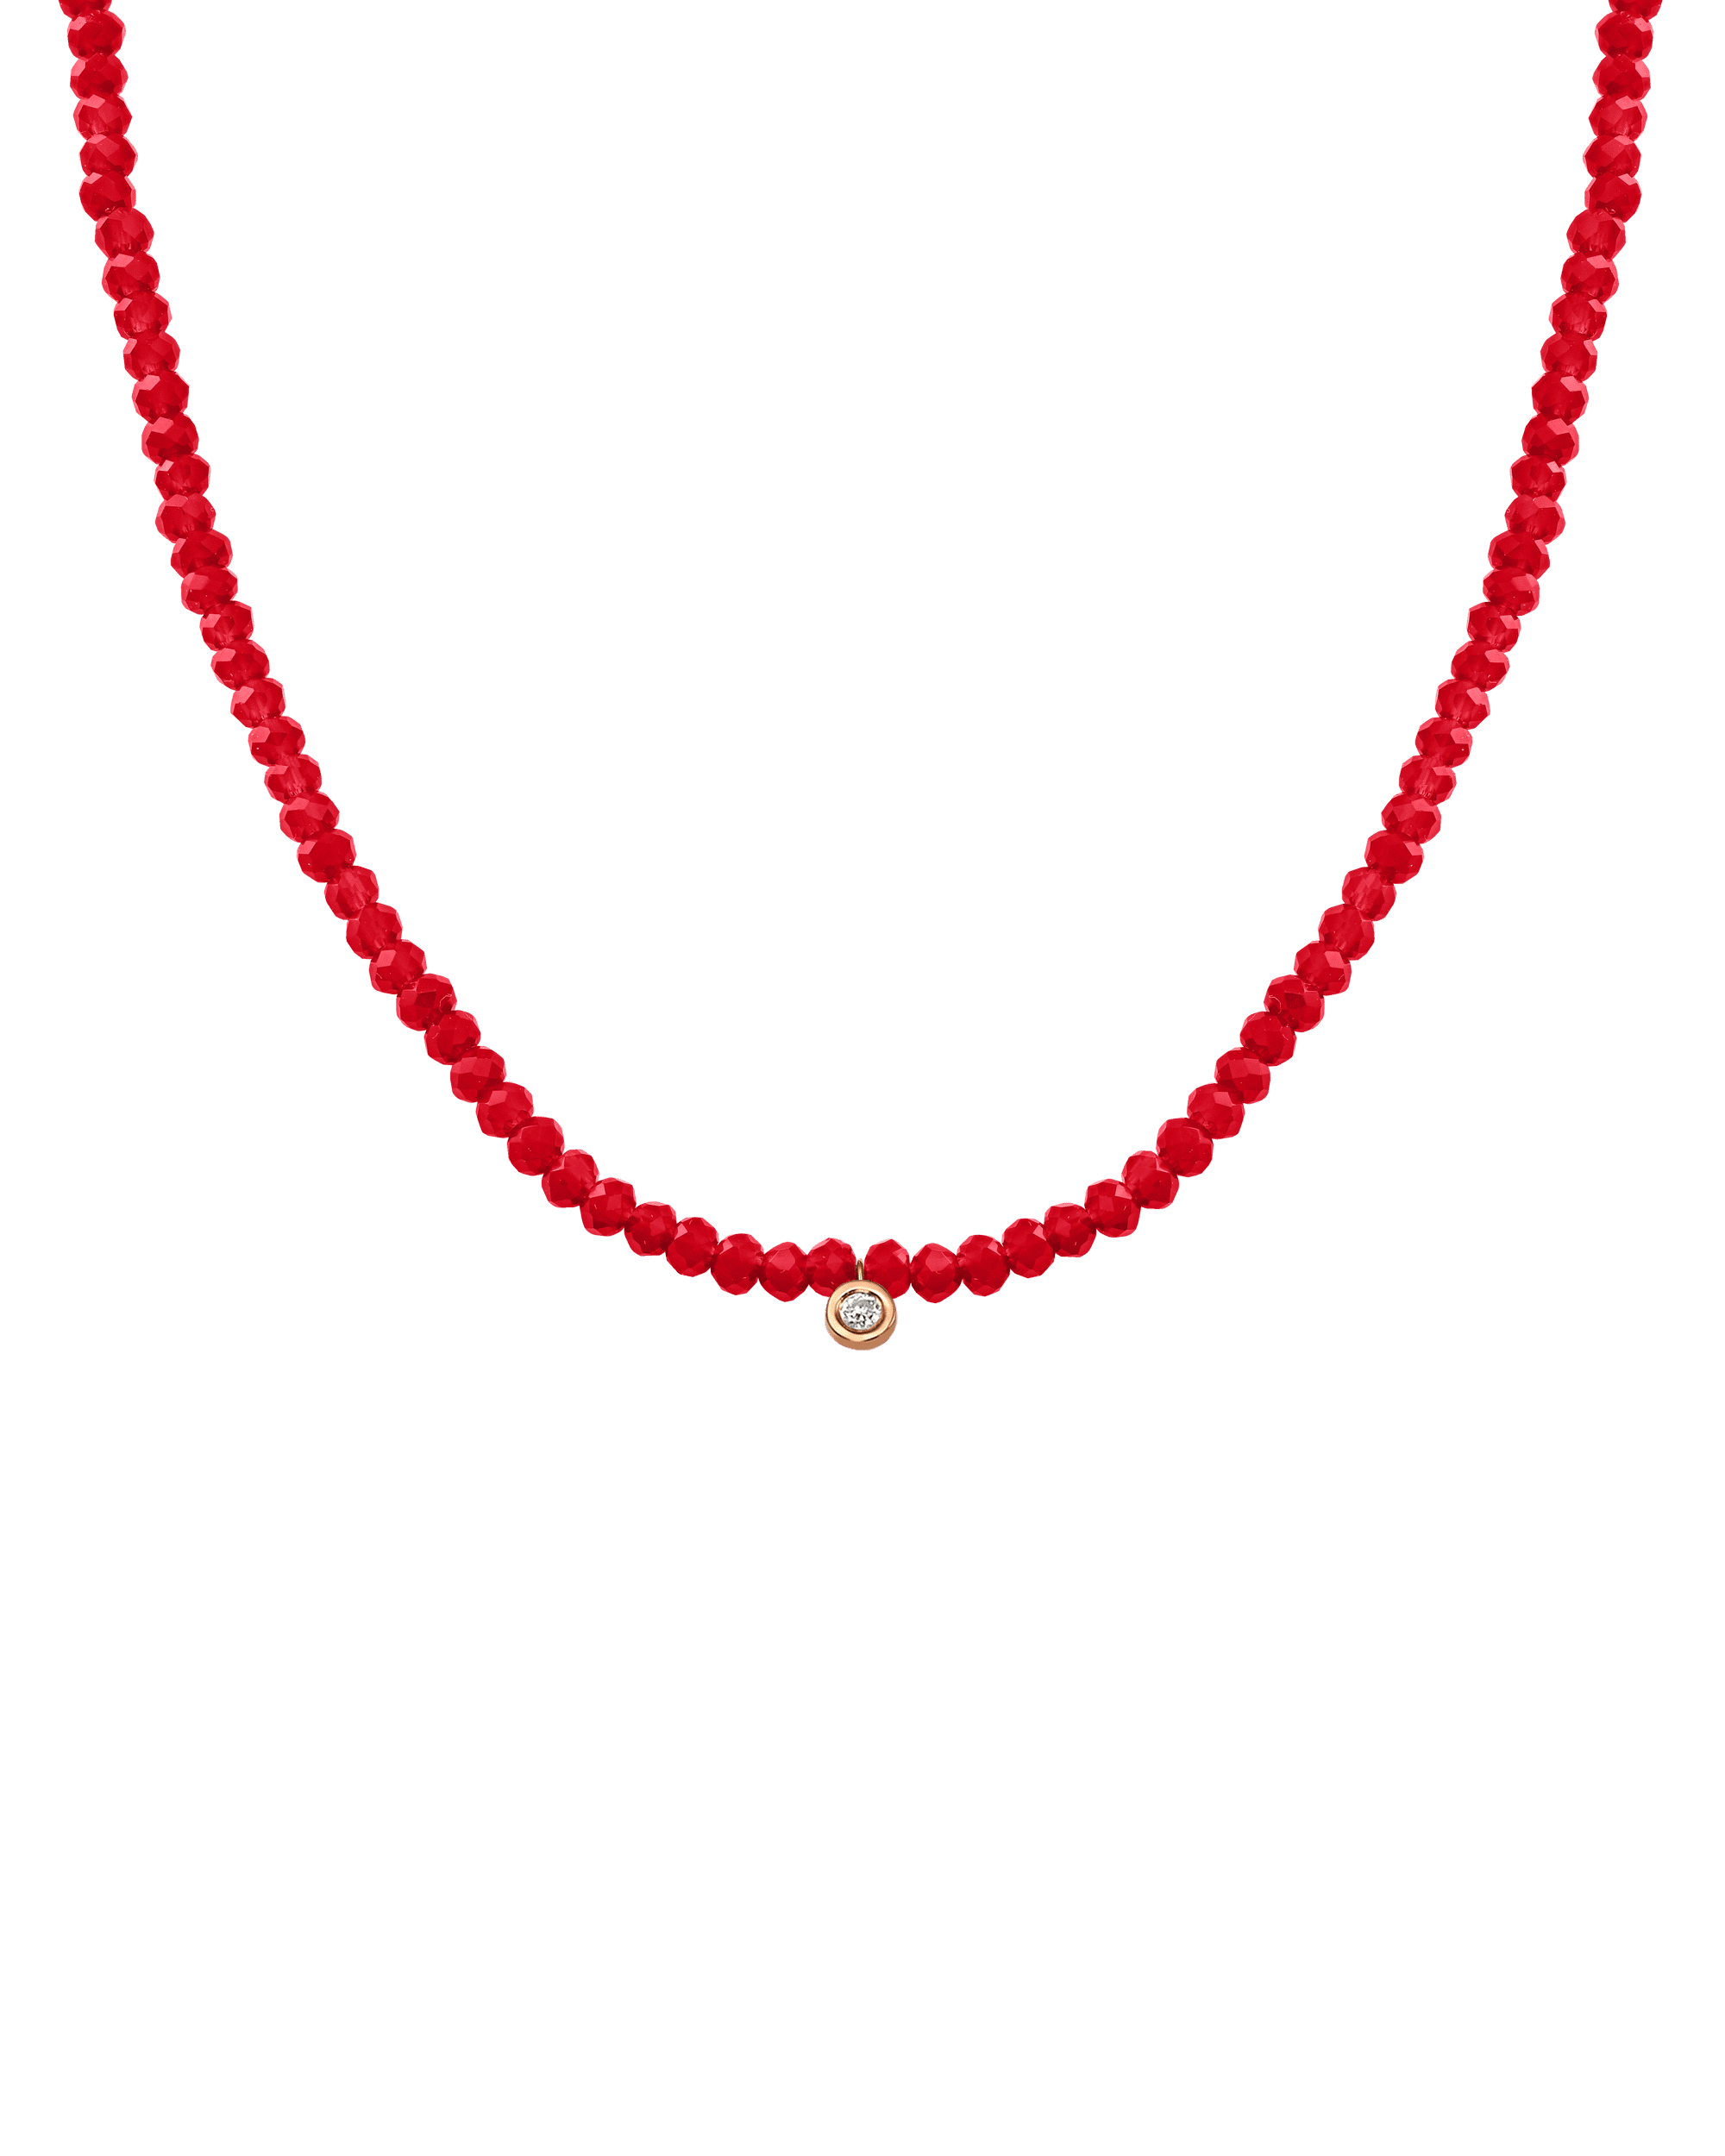 The Gemstone & Diamond Necklace